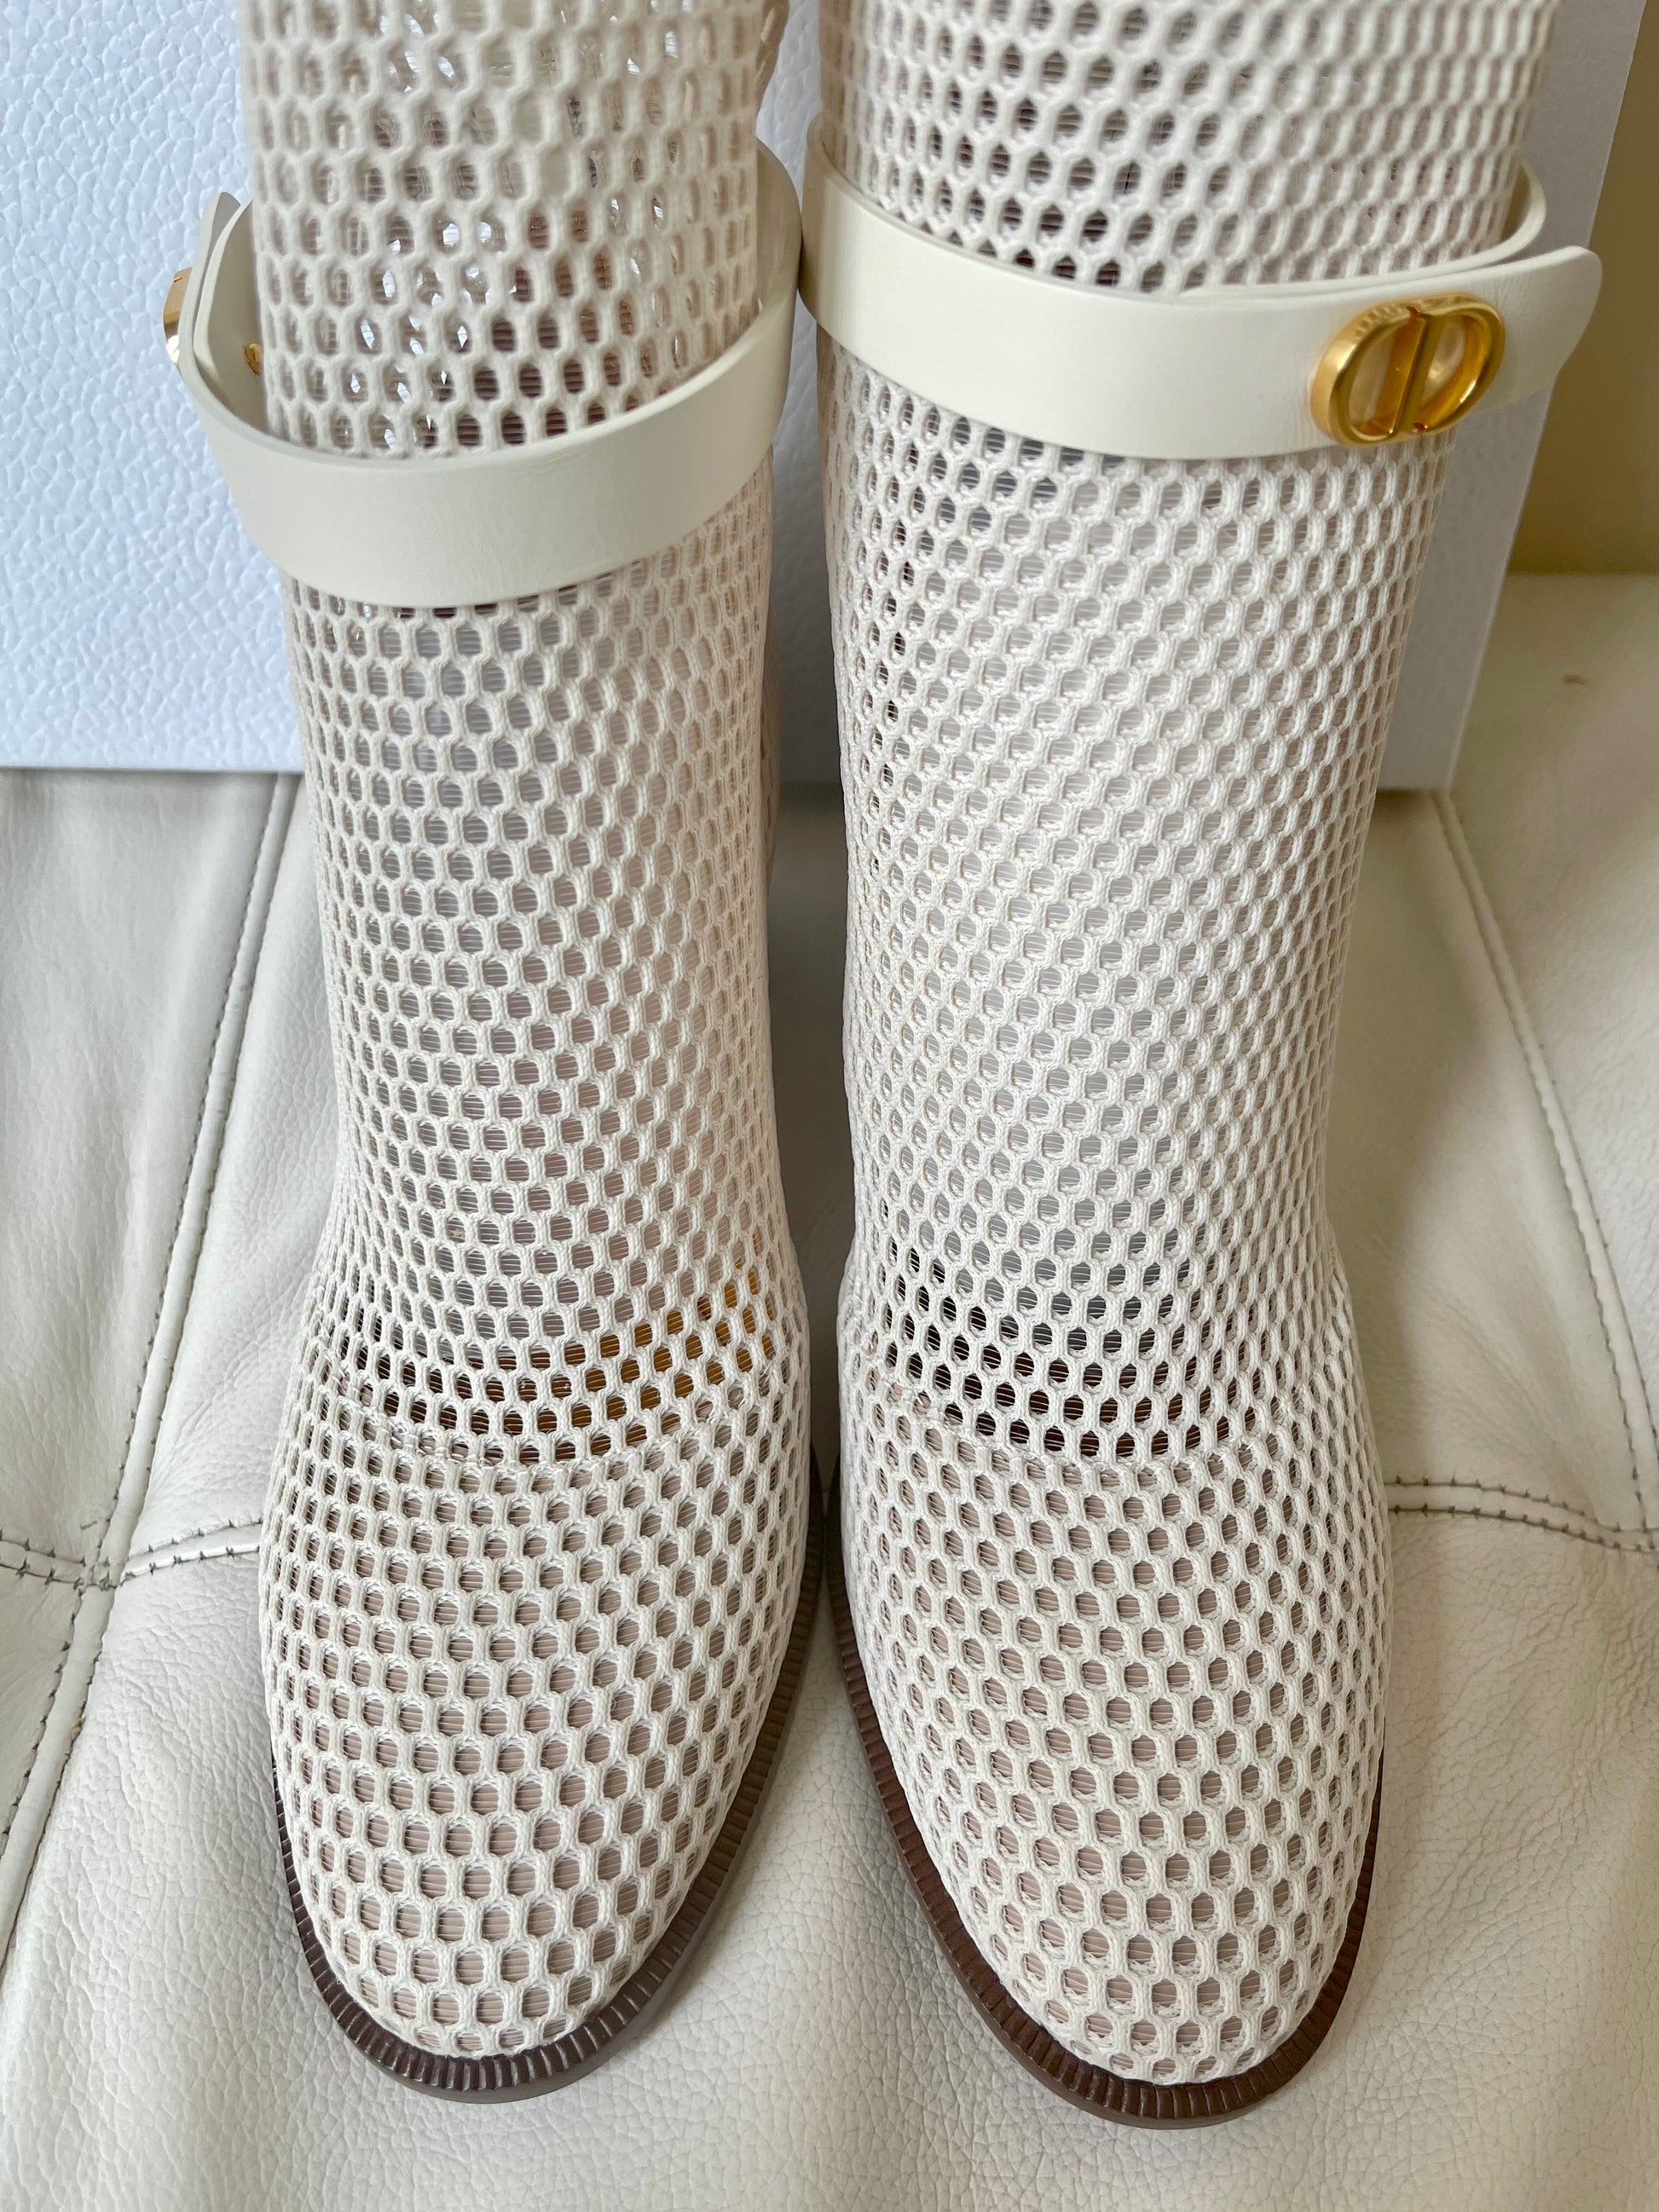 dior boots white